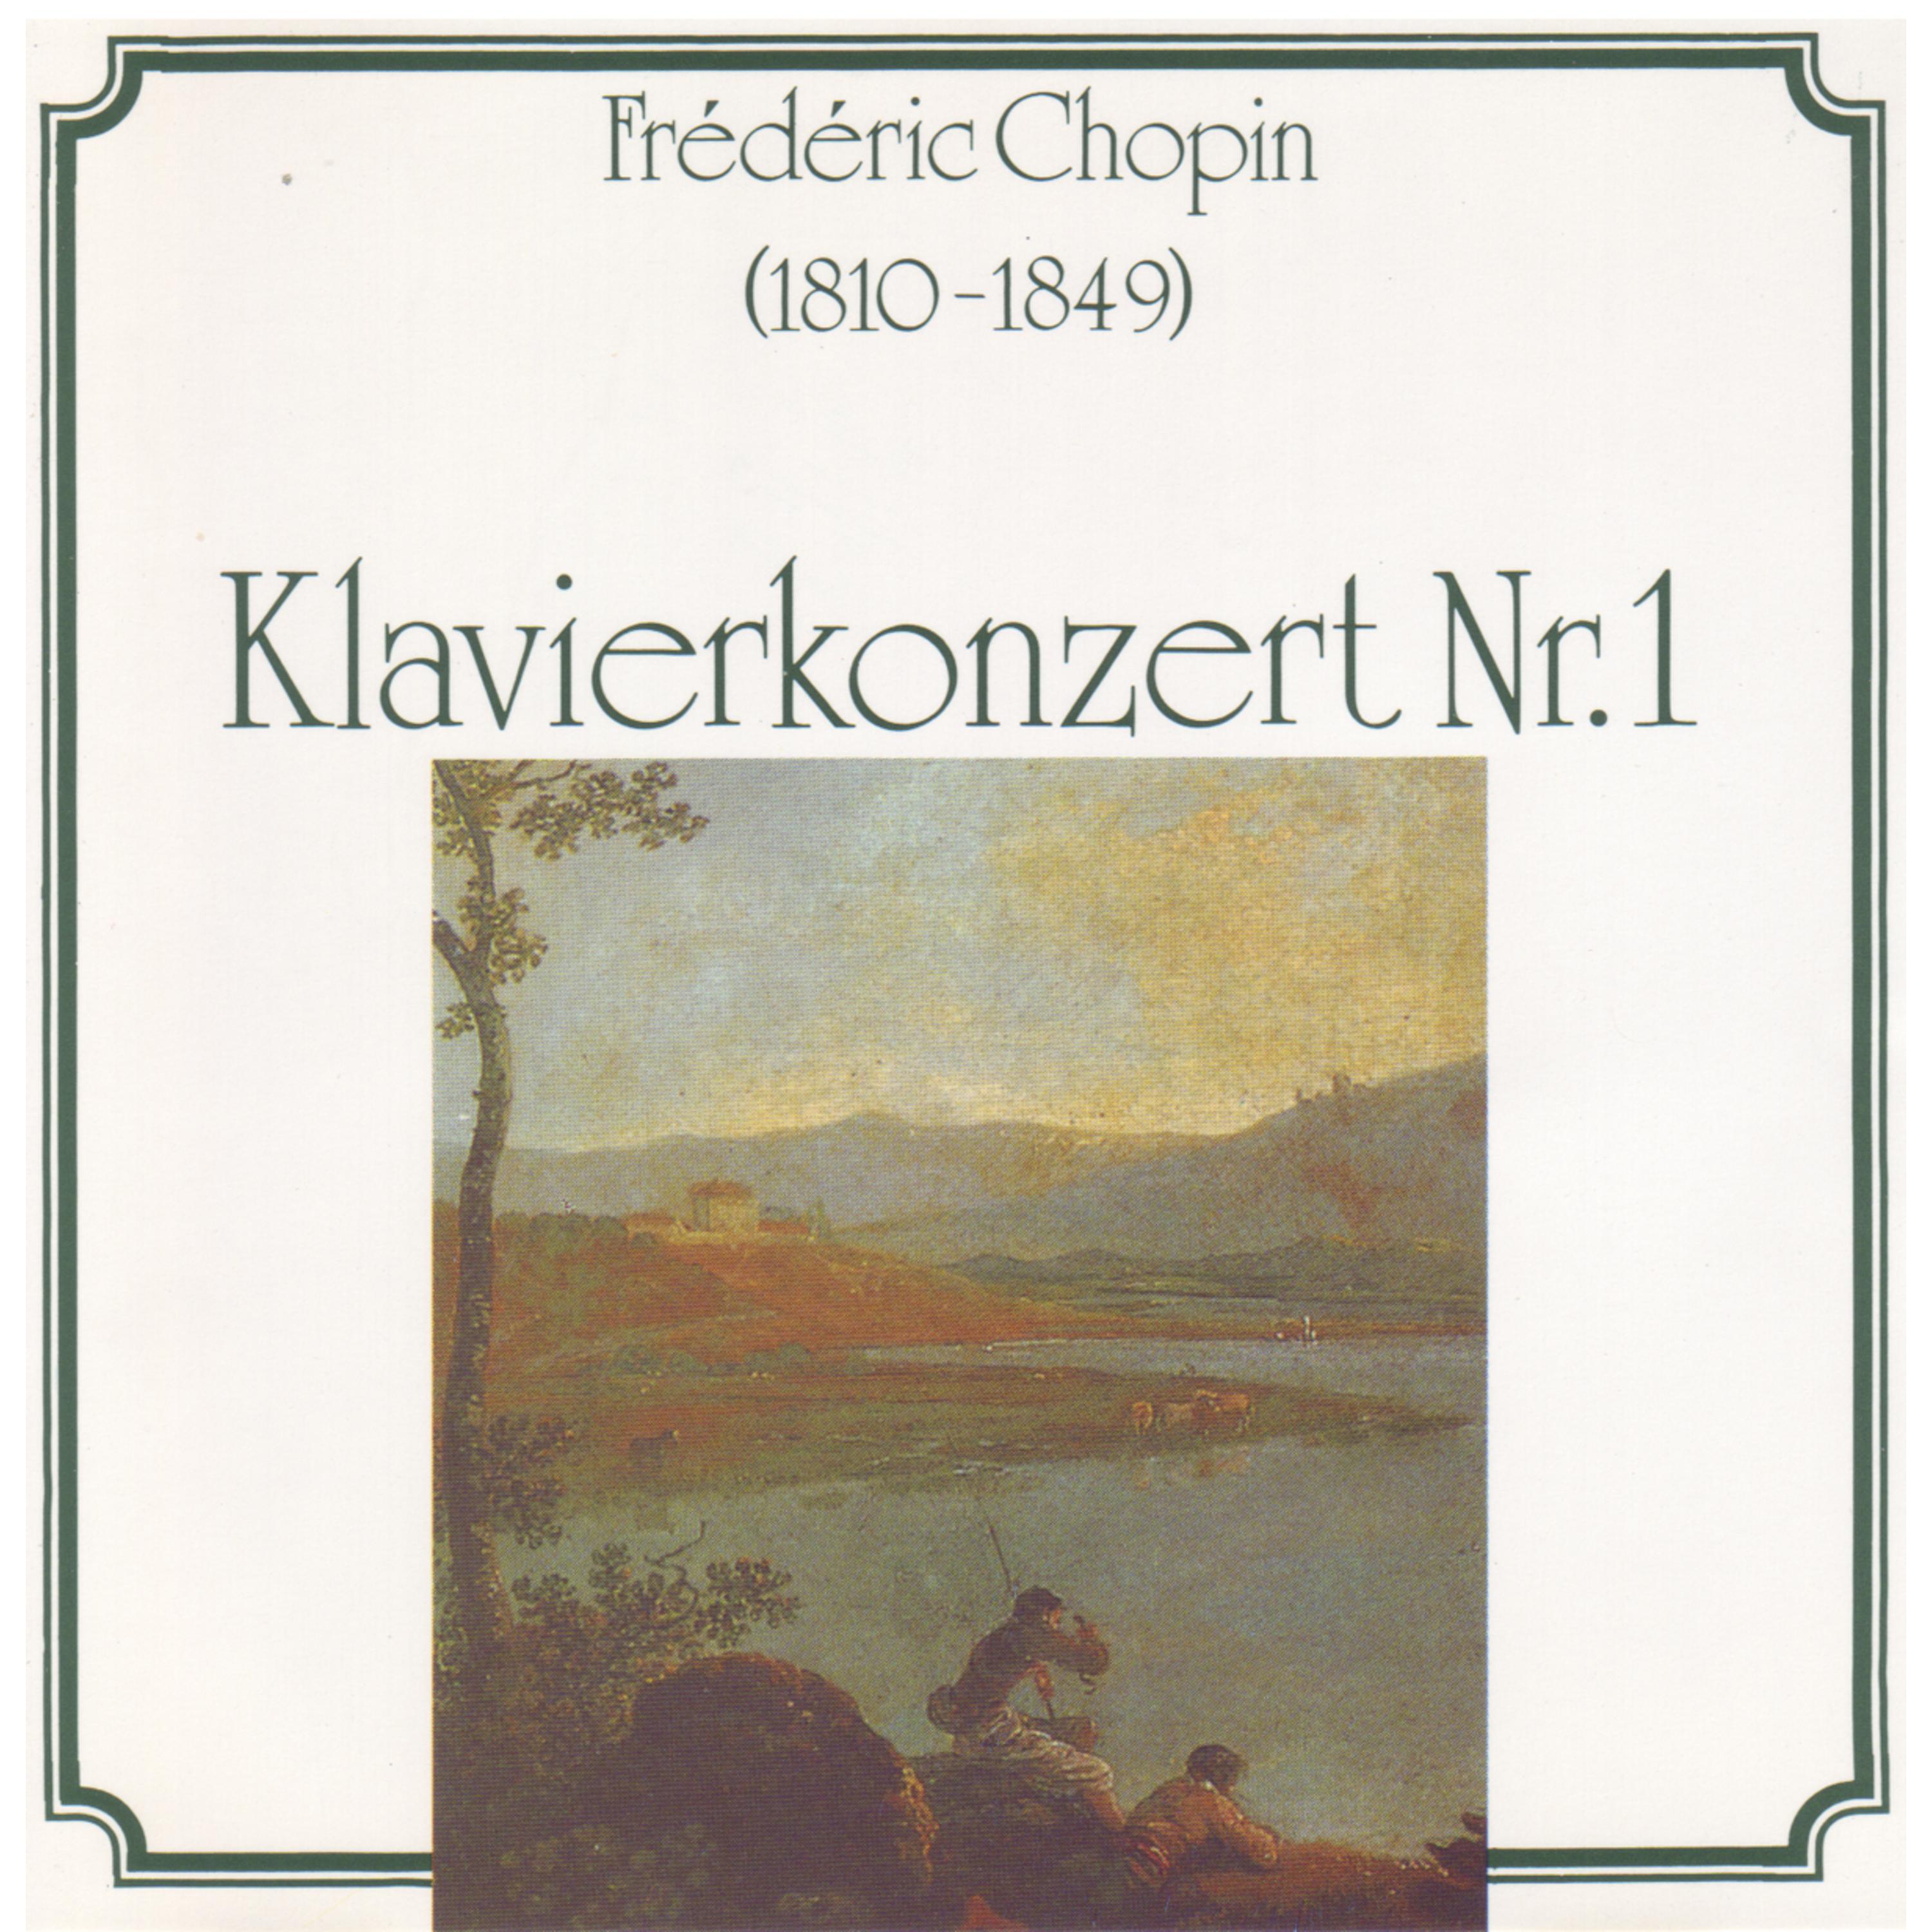 Pre lude fü r Klavier in FSharp Minor, Op. 28, No. 8